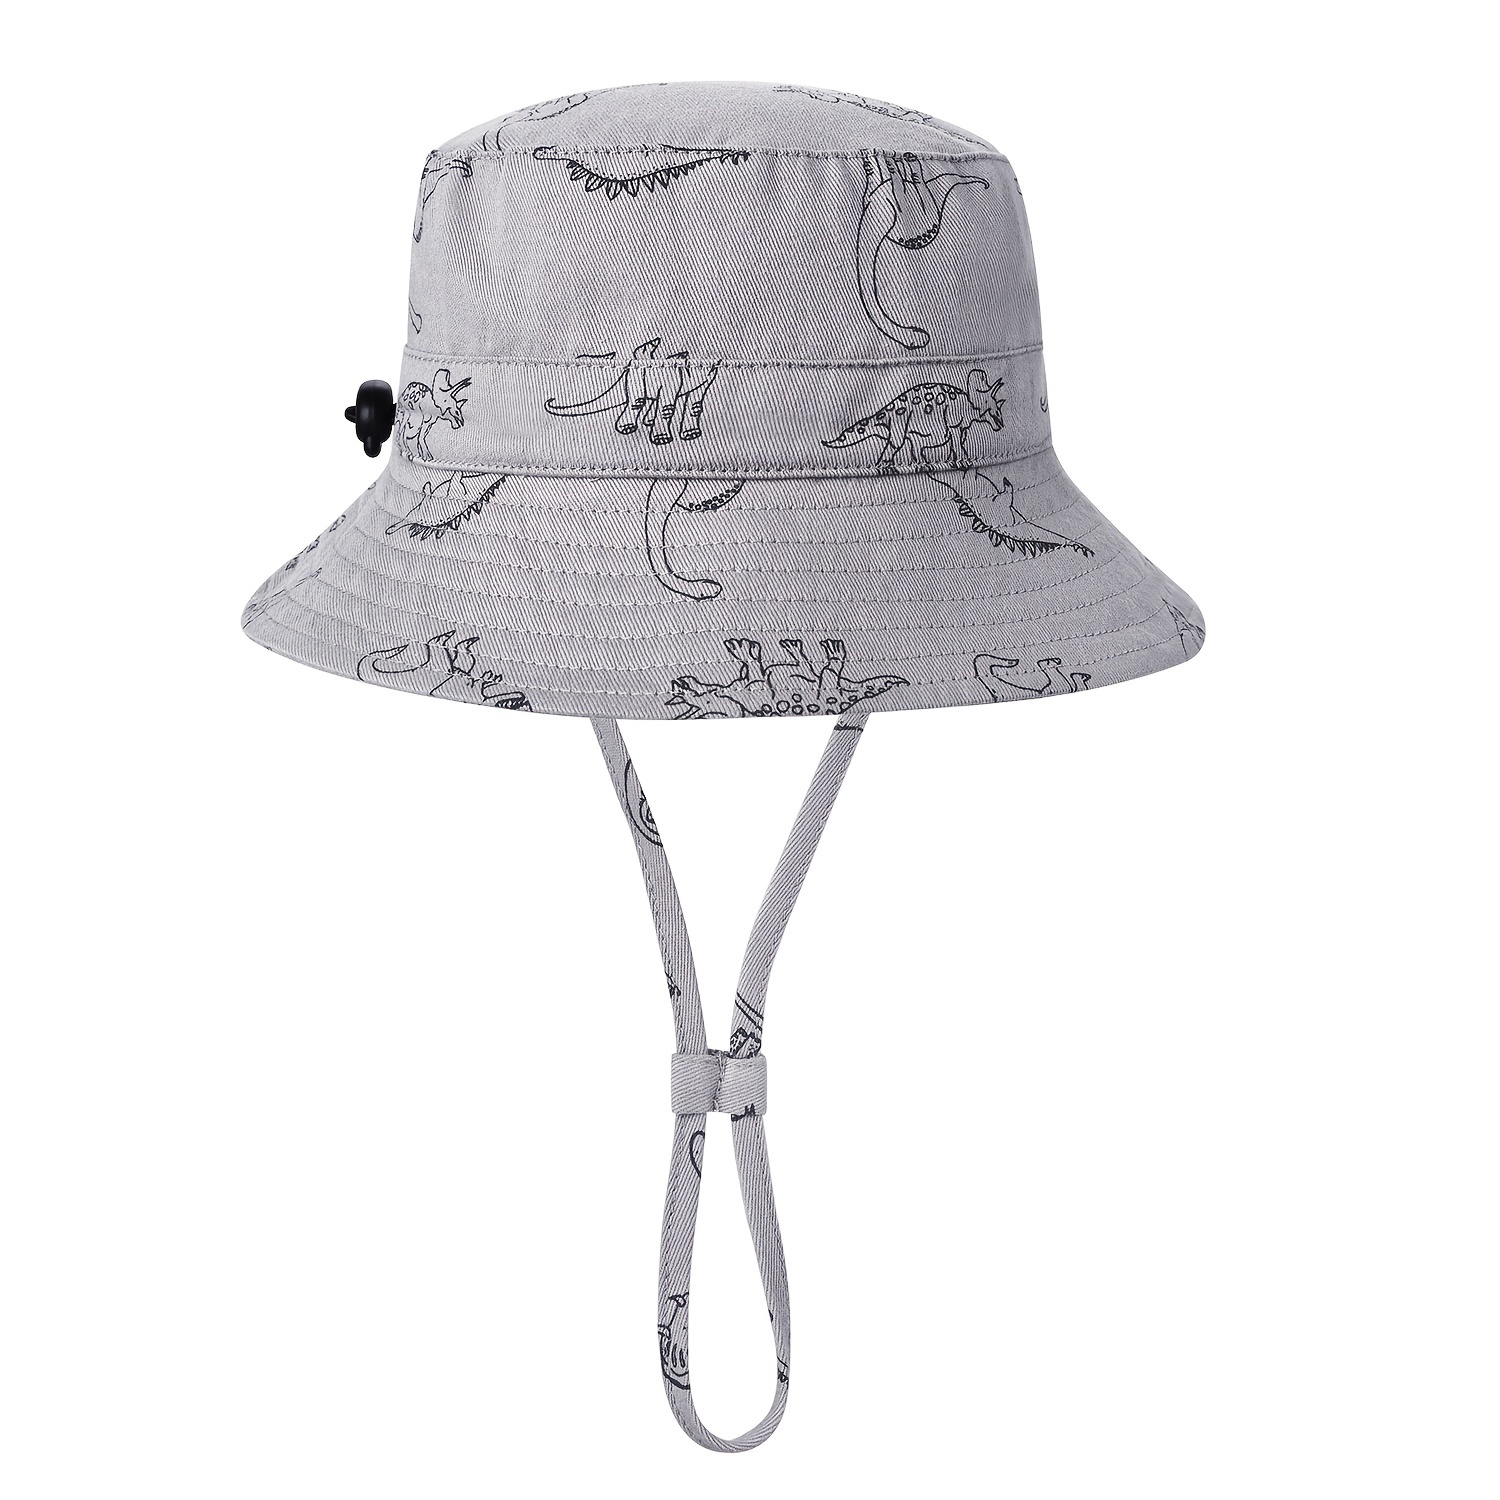 XG-Tech Bucket Hat 100% Cotton Packable Summer Travel Cap Sun Hat for Men and Women Black S/M, adult Unisex, Size: One Size